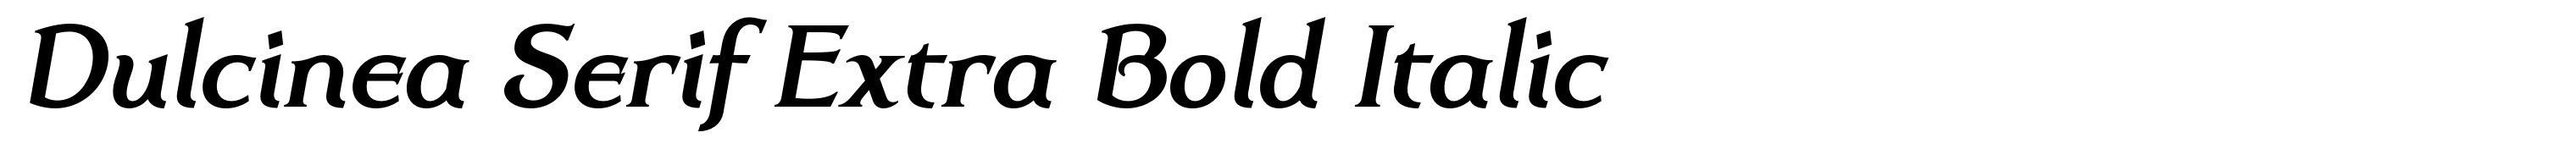 Dulcinea Serif Extra Bold Italic